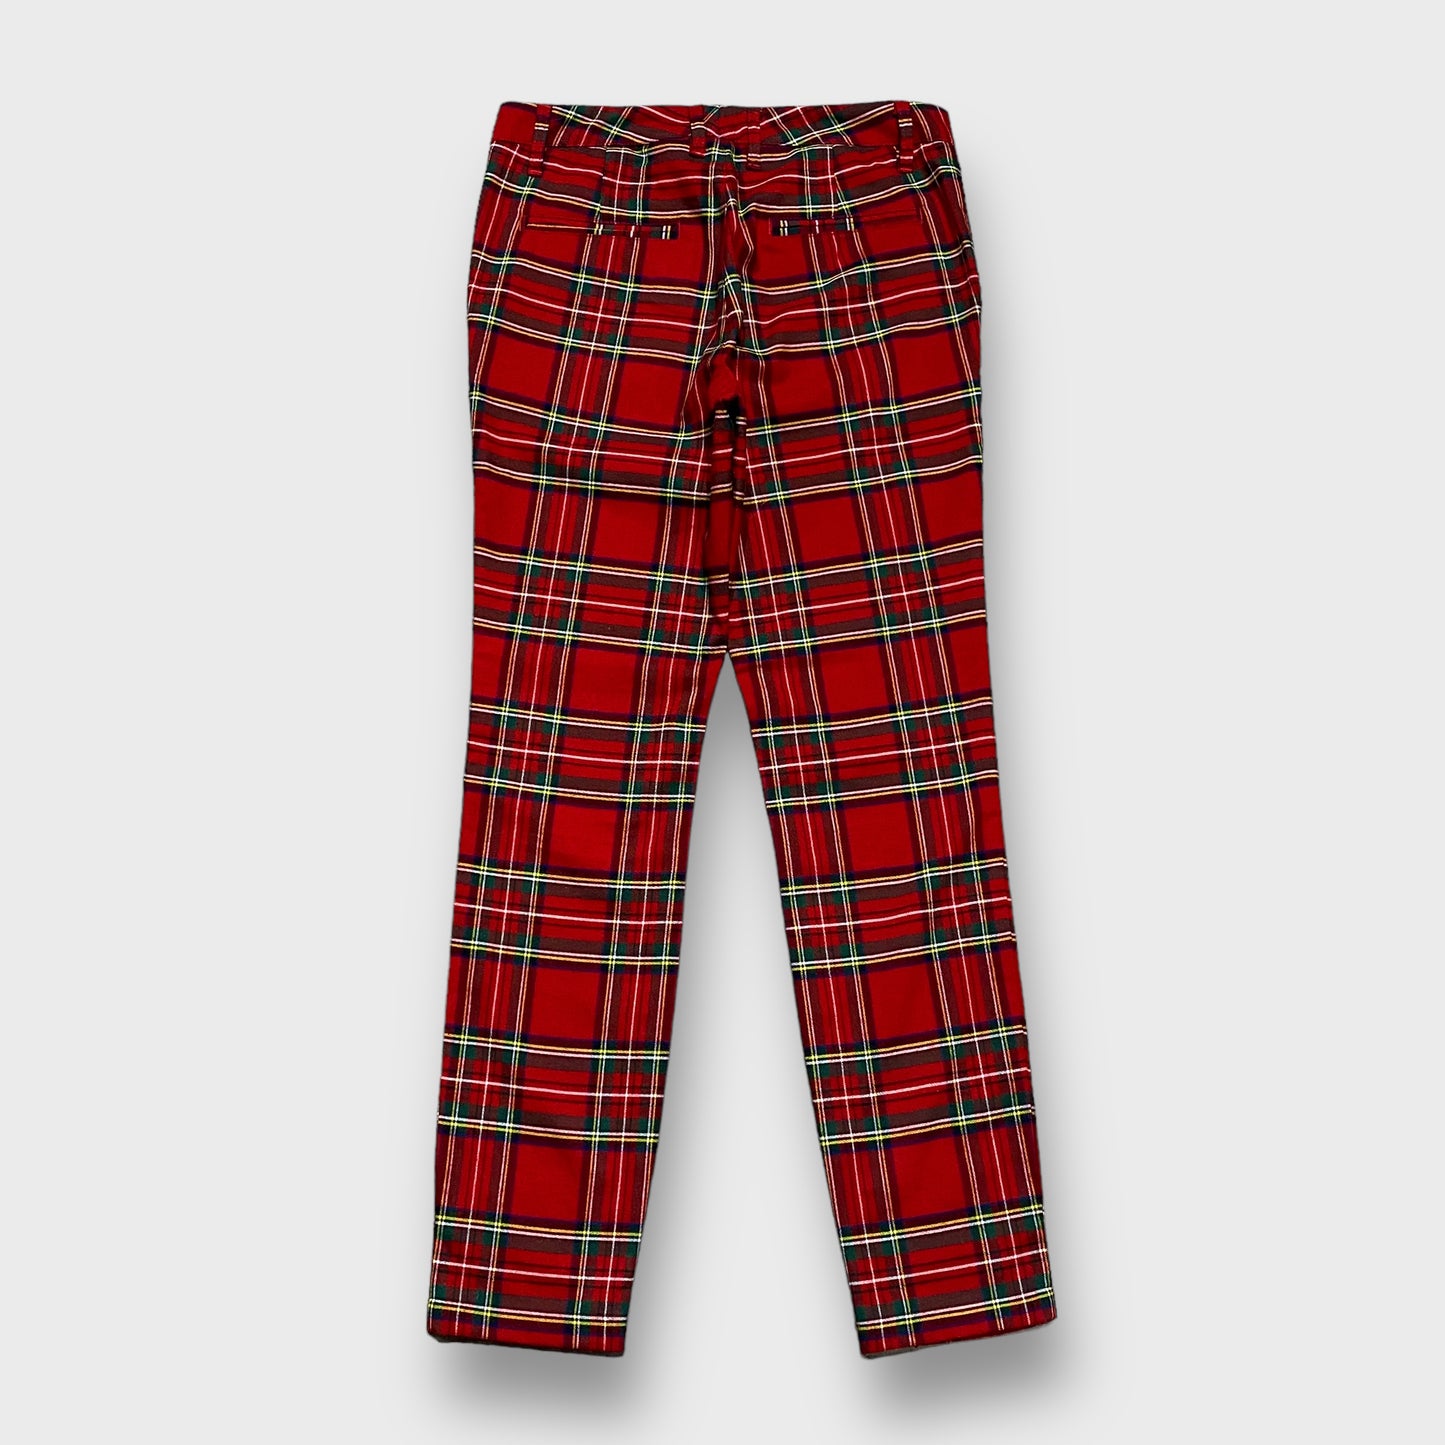 Tartan check pattern skinny pants